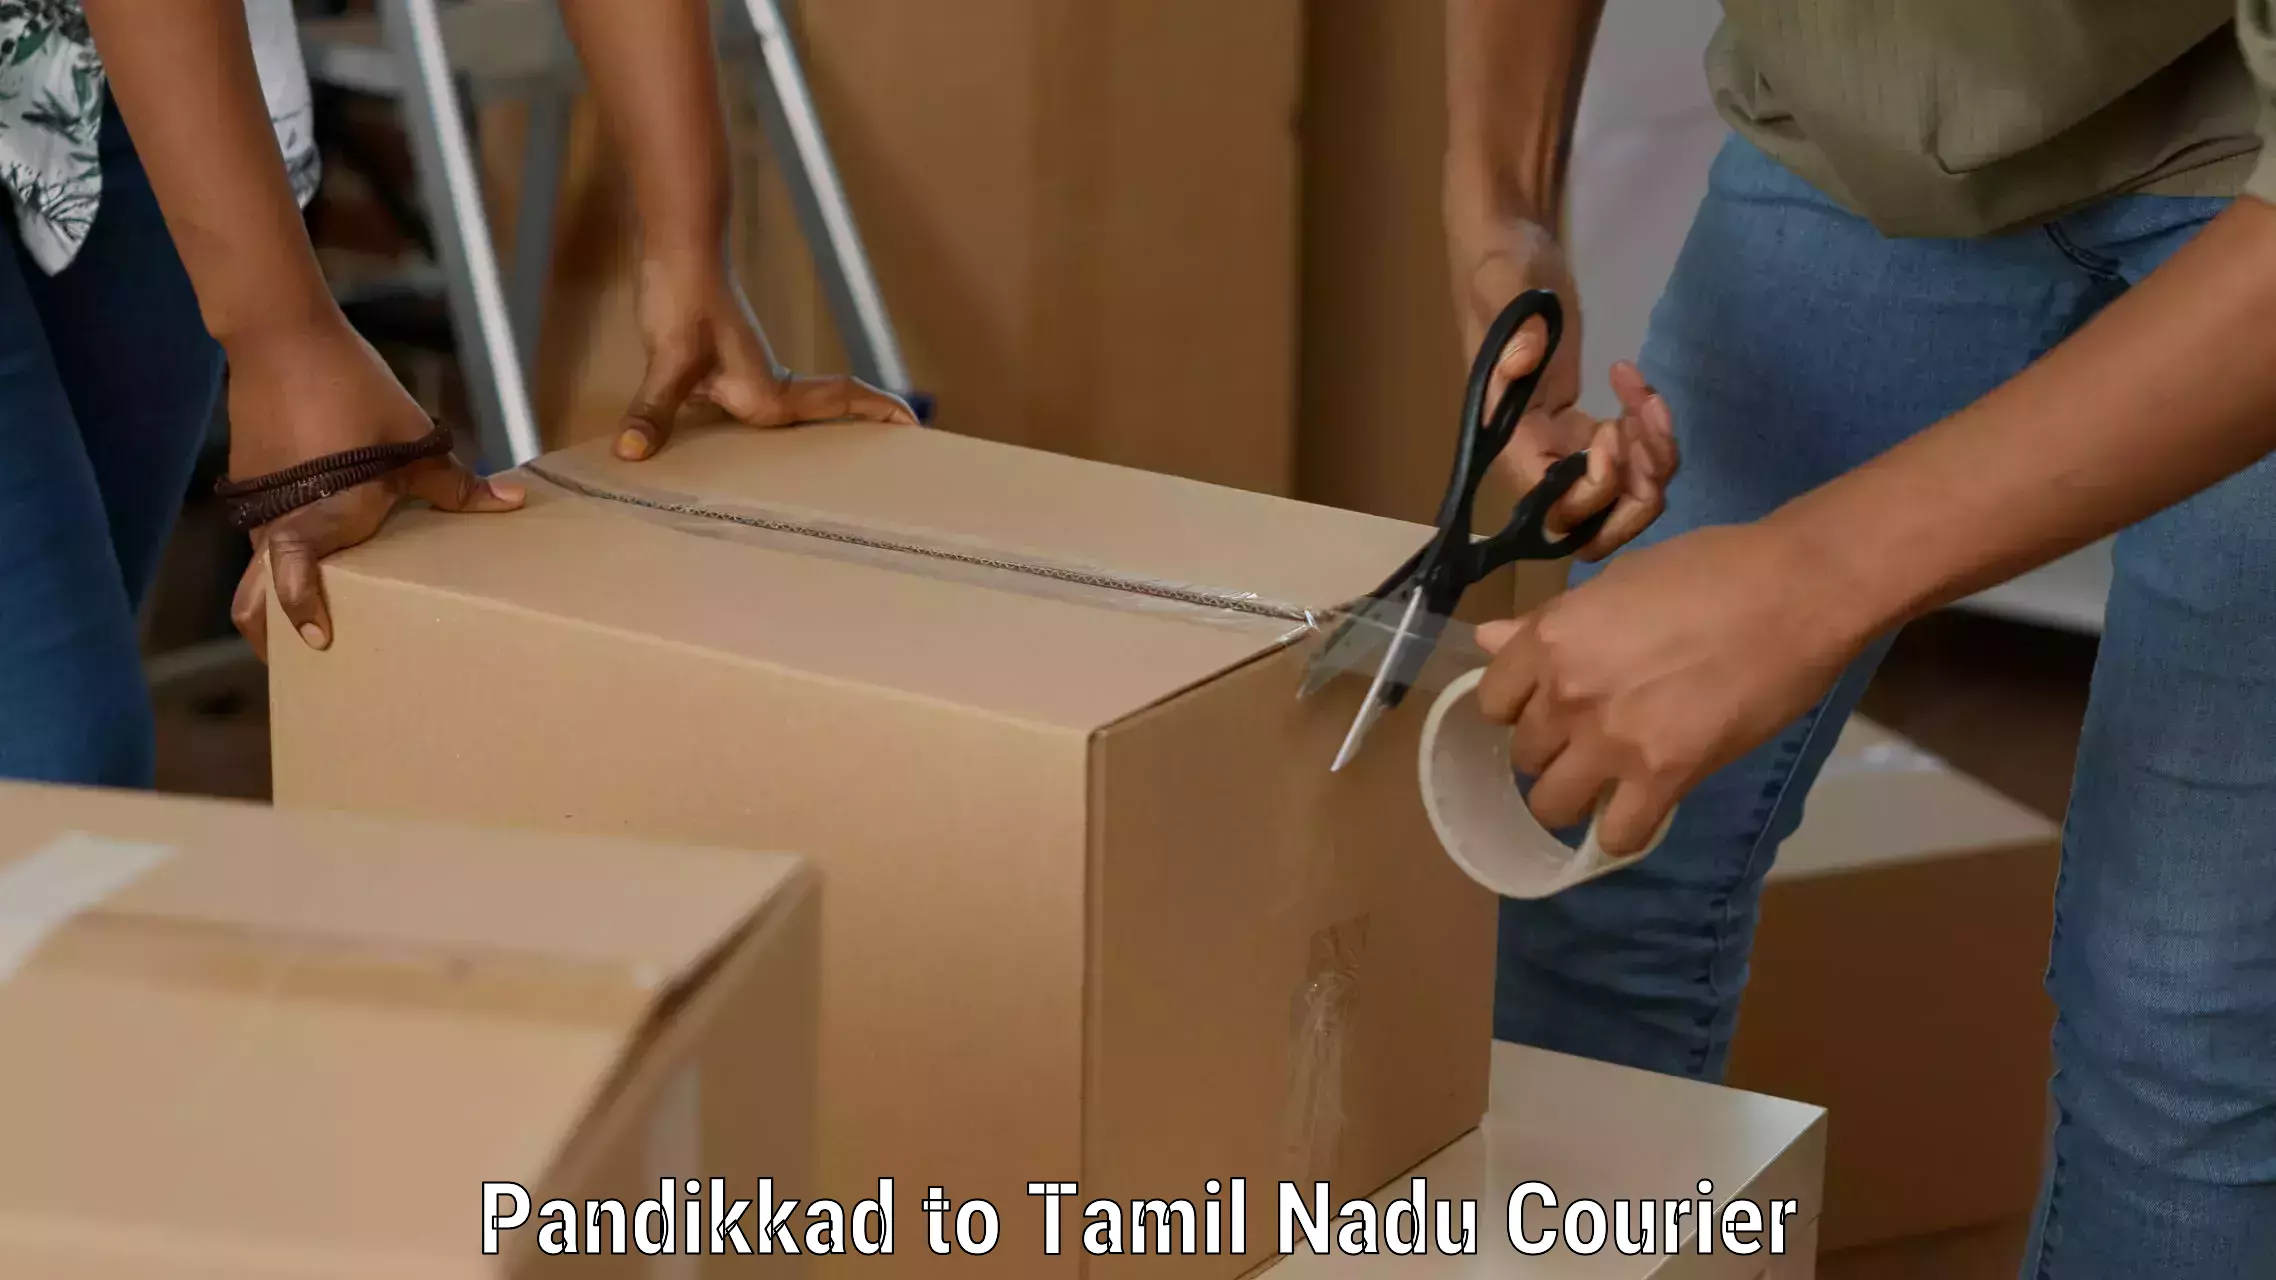 Express delivery capabilities Pandikkad to Viluppuram